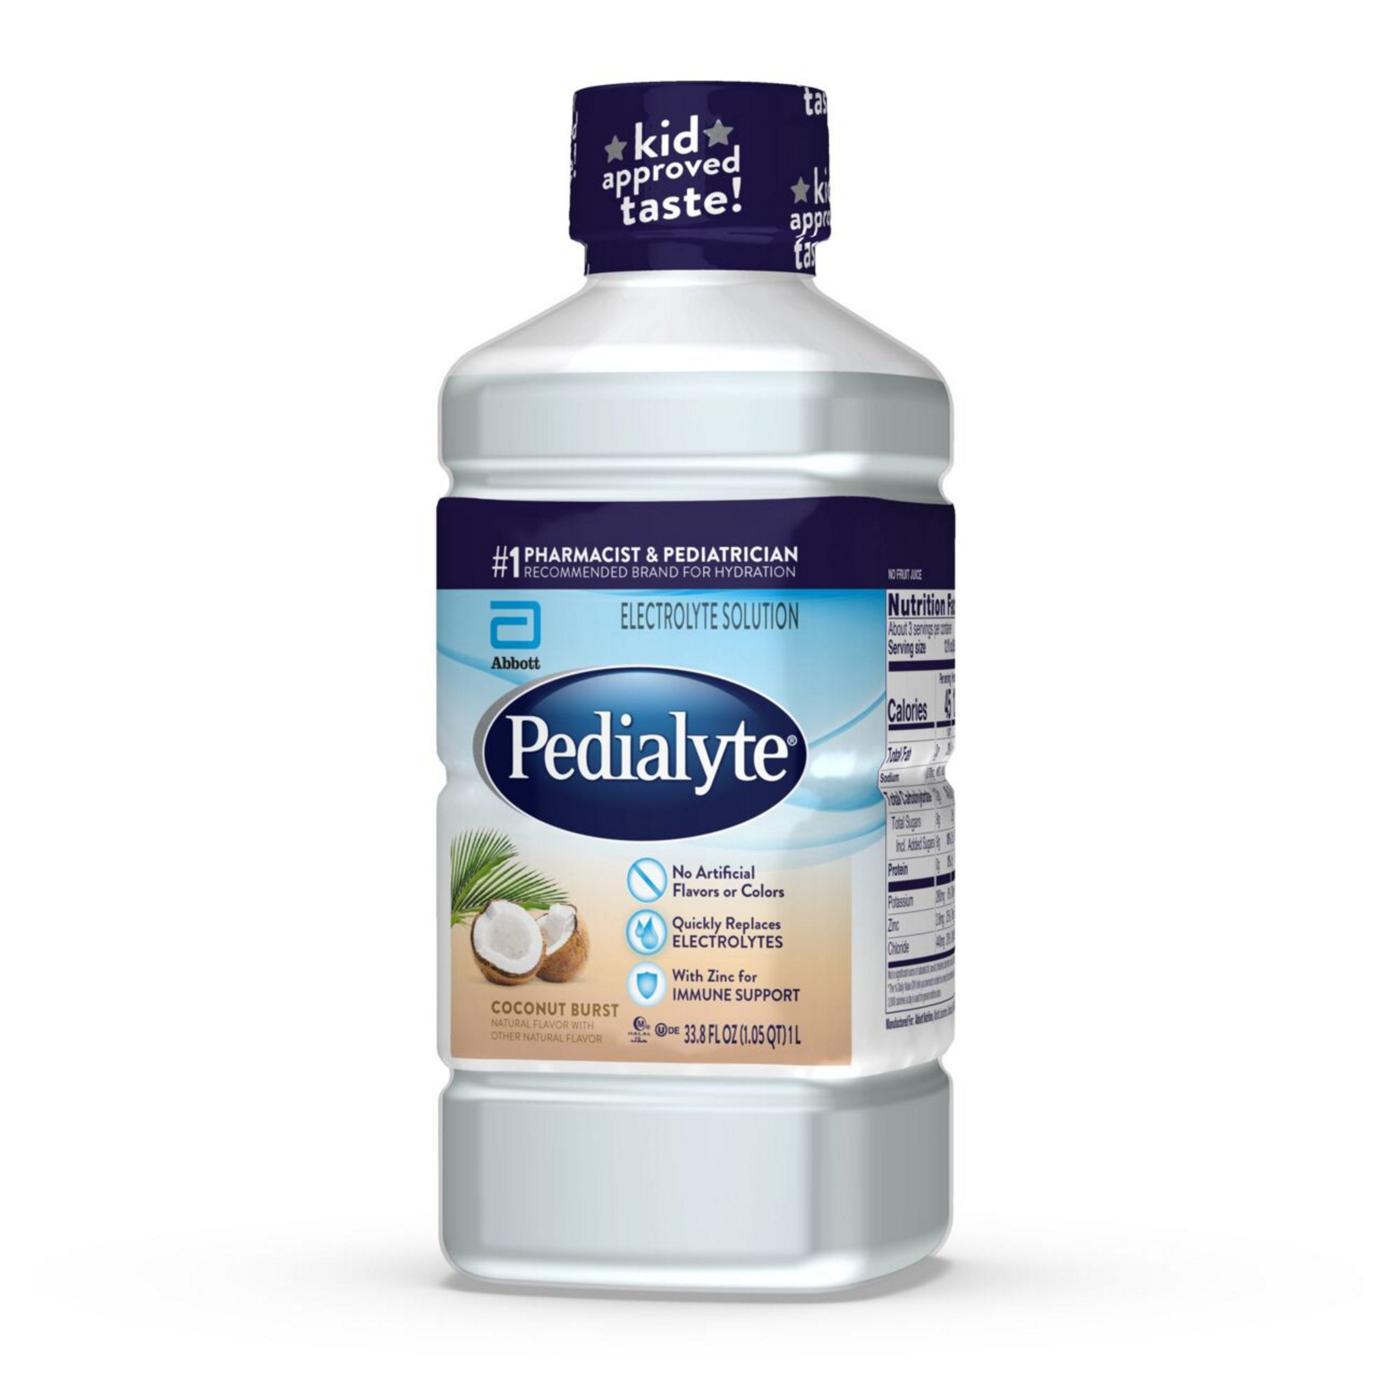 Pedialyte Electrolyte Solution - Coconut Burst; image 6 of 7